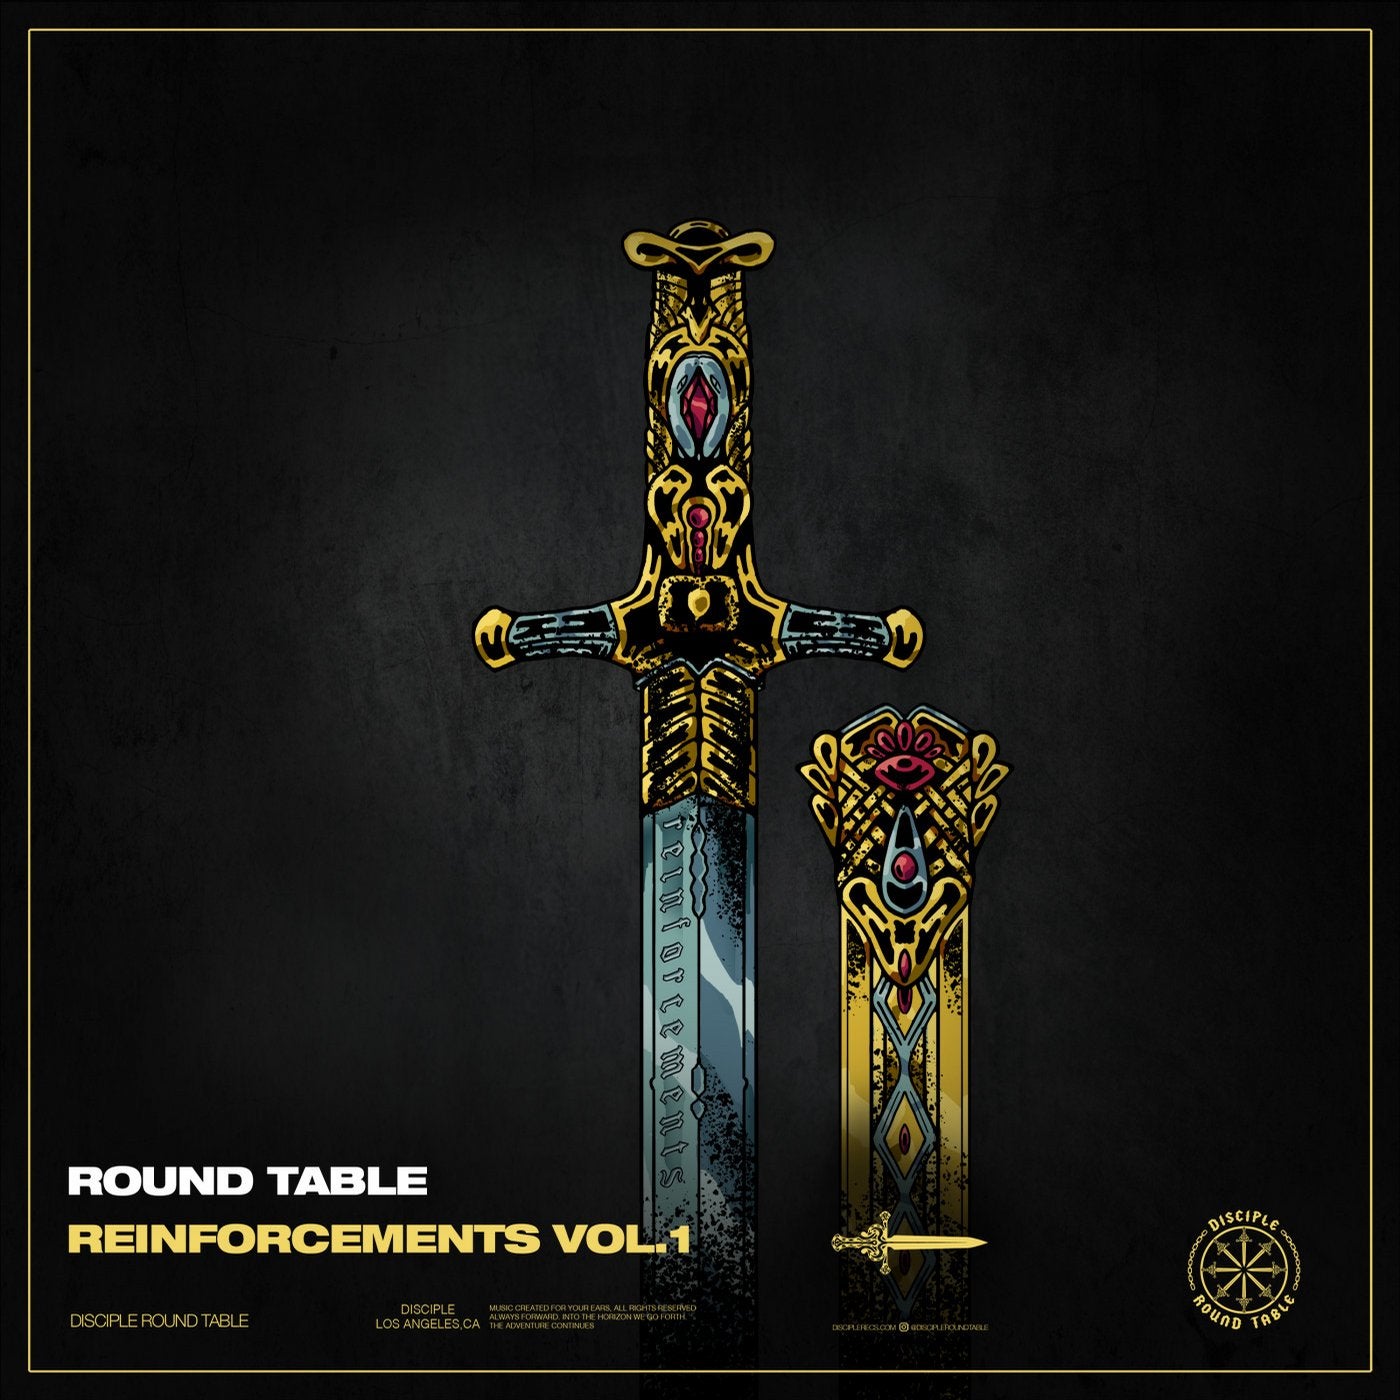 Round Table Reinforcements Vol. 1